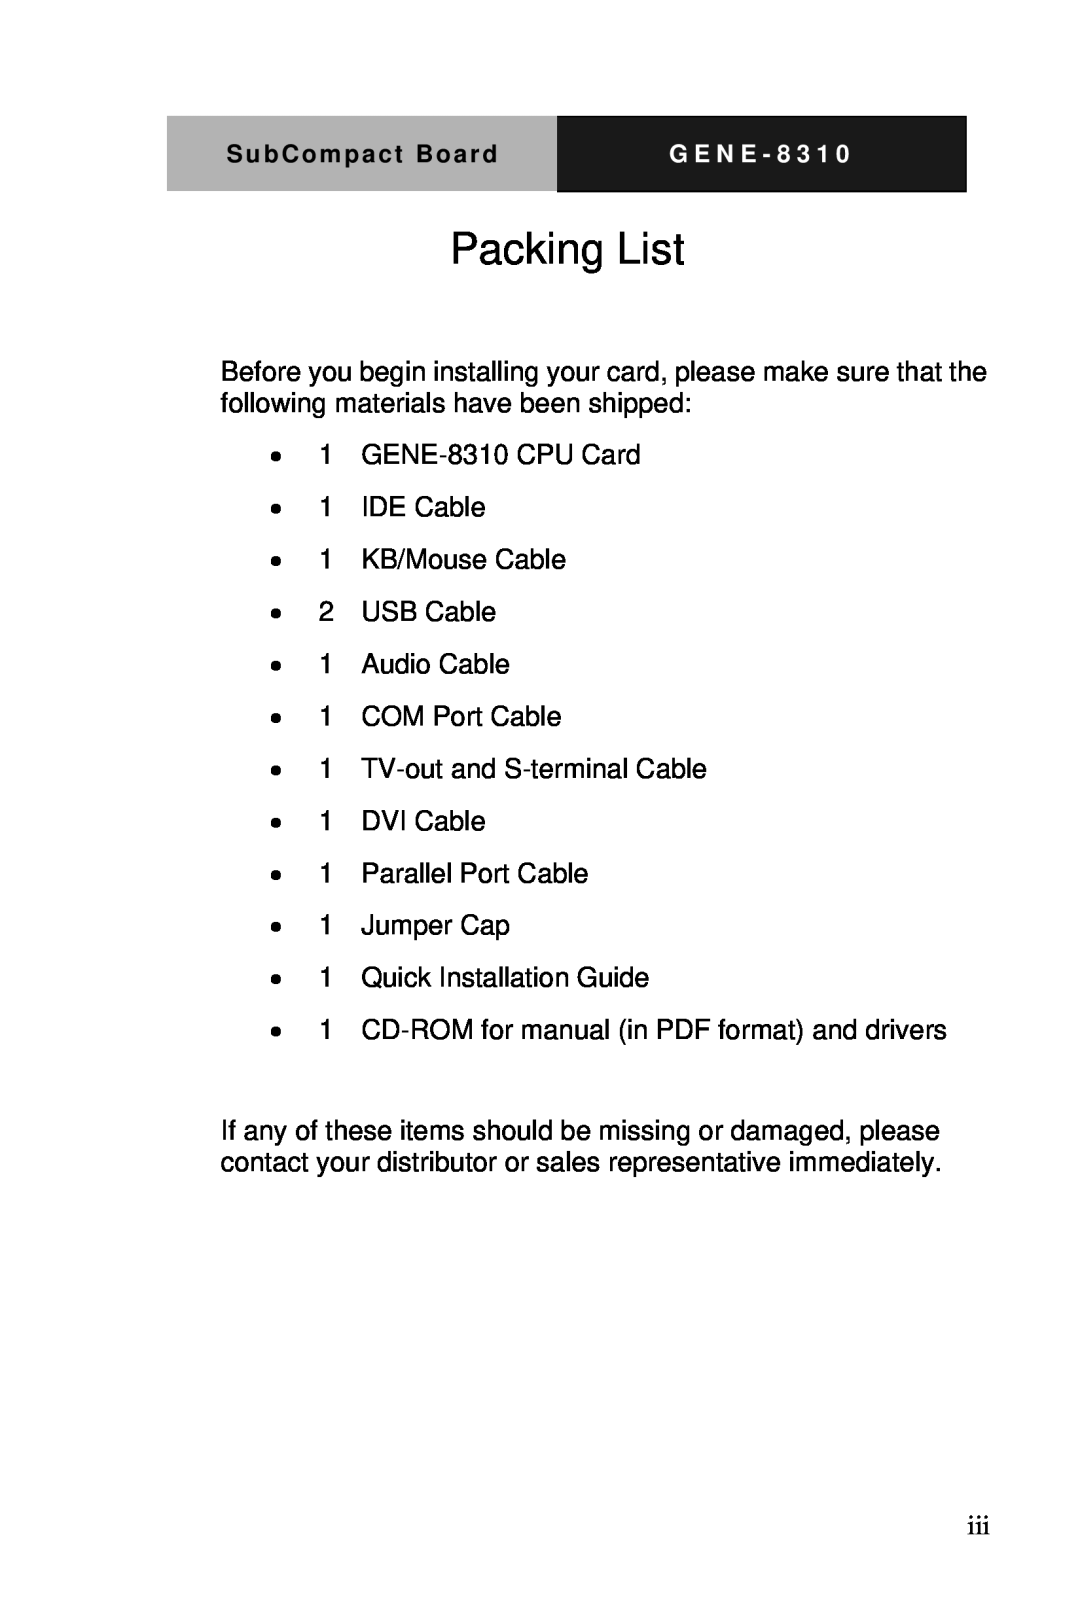 Intel GENE-8310 manual Packing List 